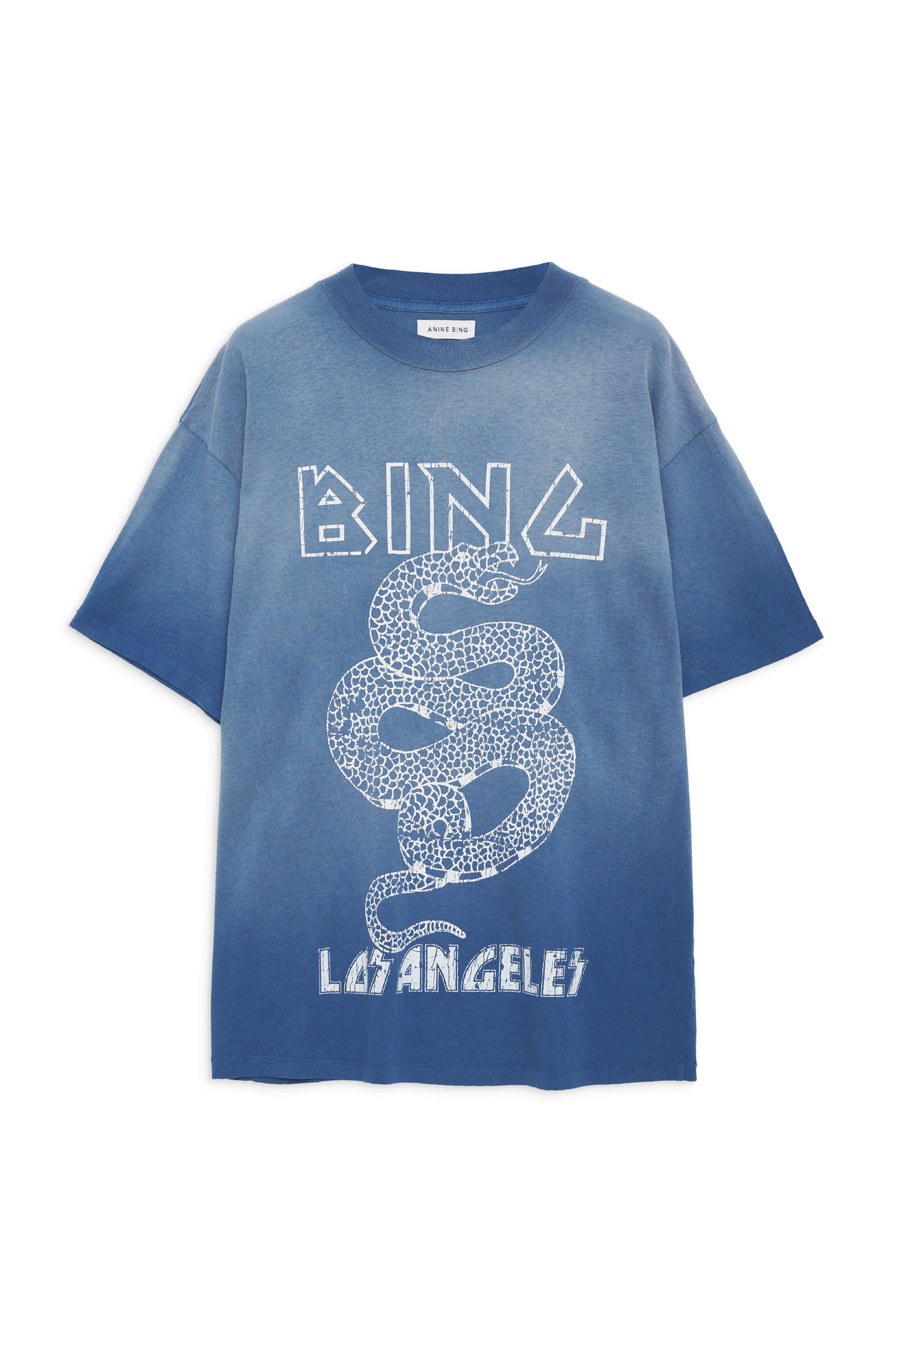 Anine Bing - Ashton Tee Snake in Washed Electric Blue